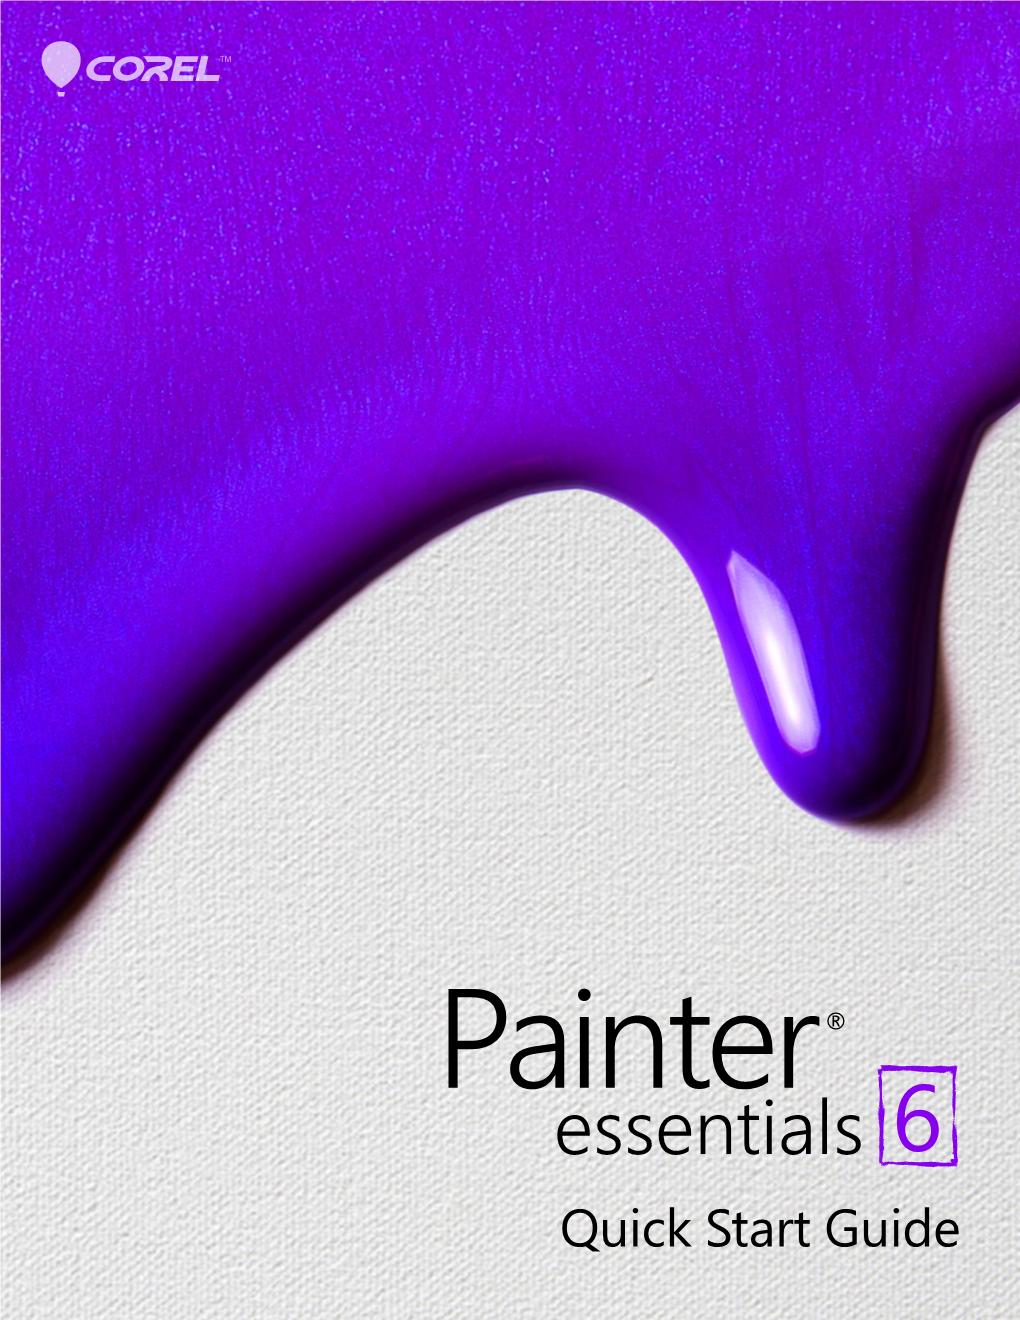 Corel Painter Essentials 6 Quick Start Guide